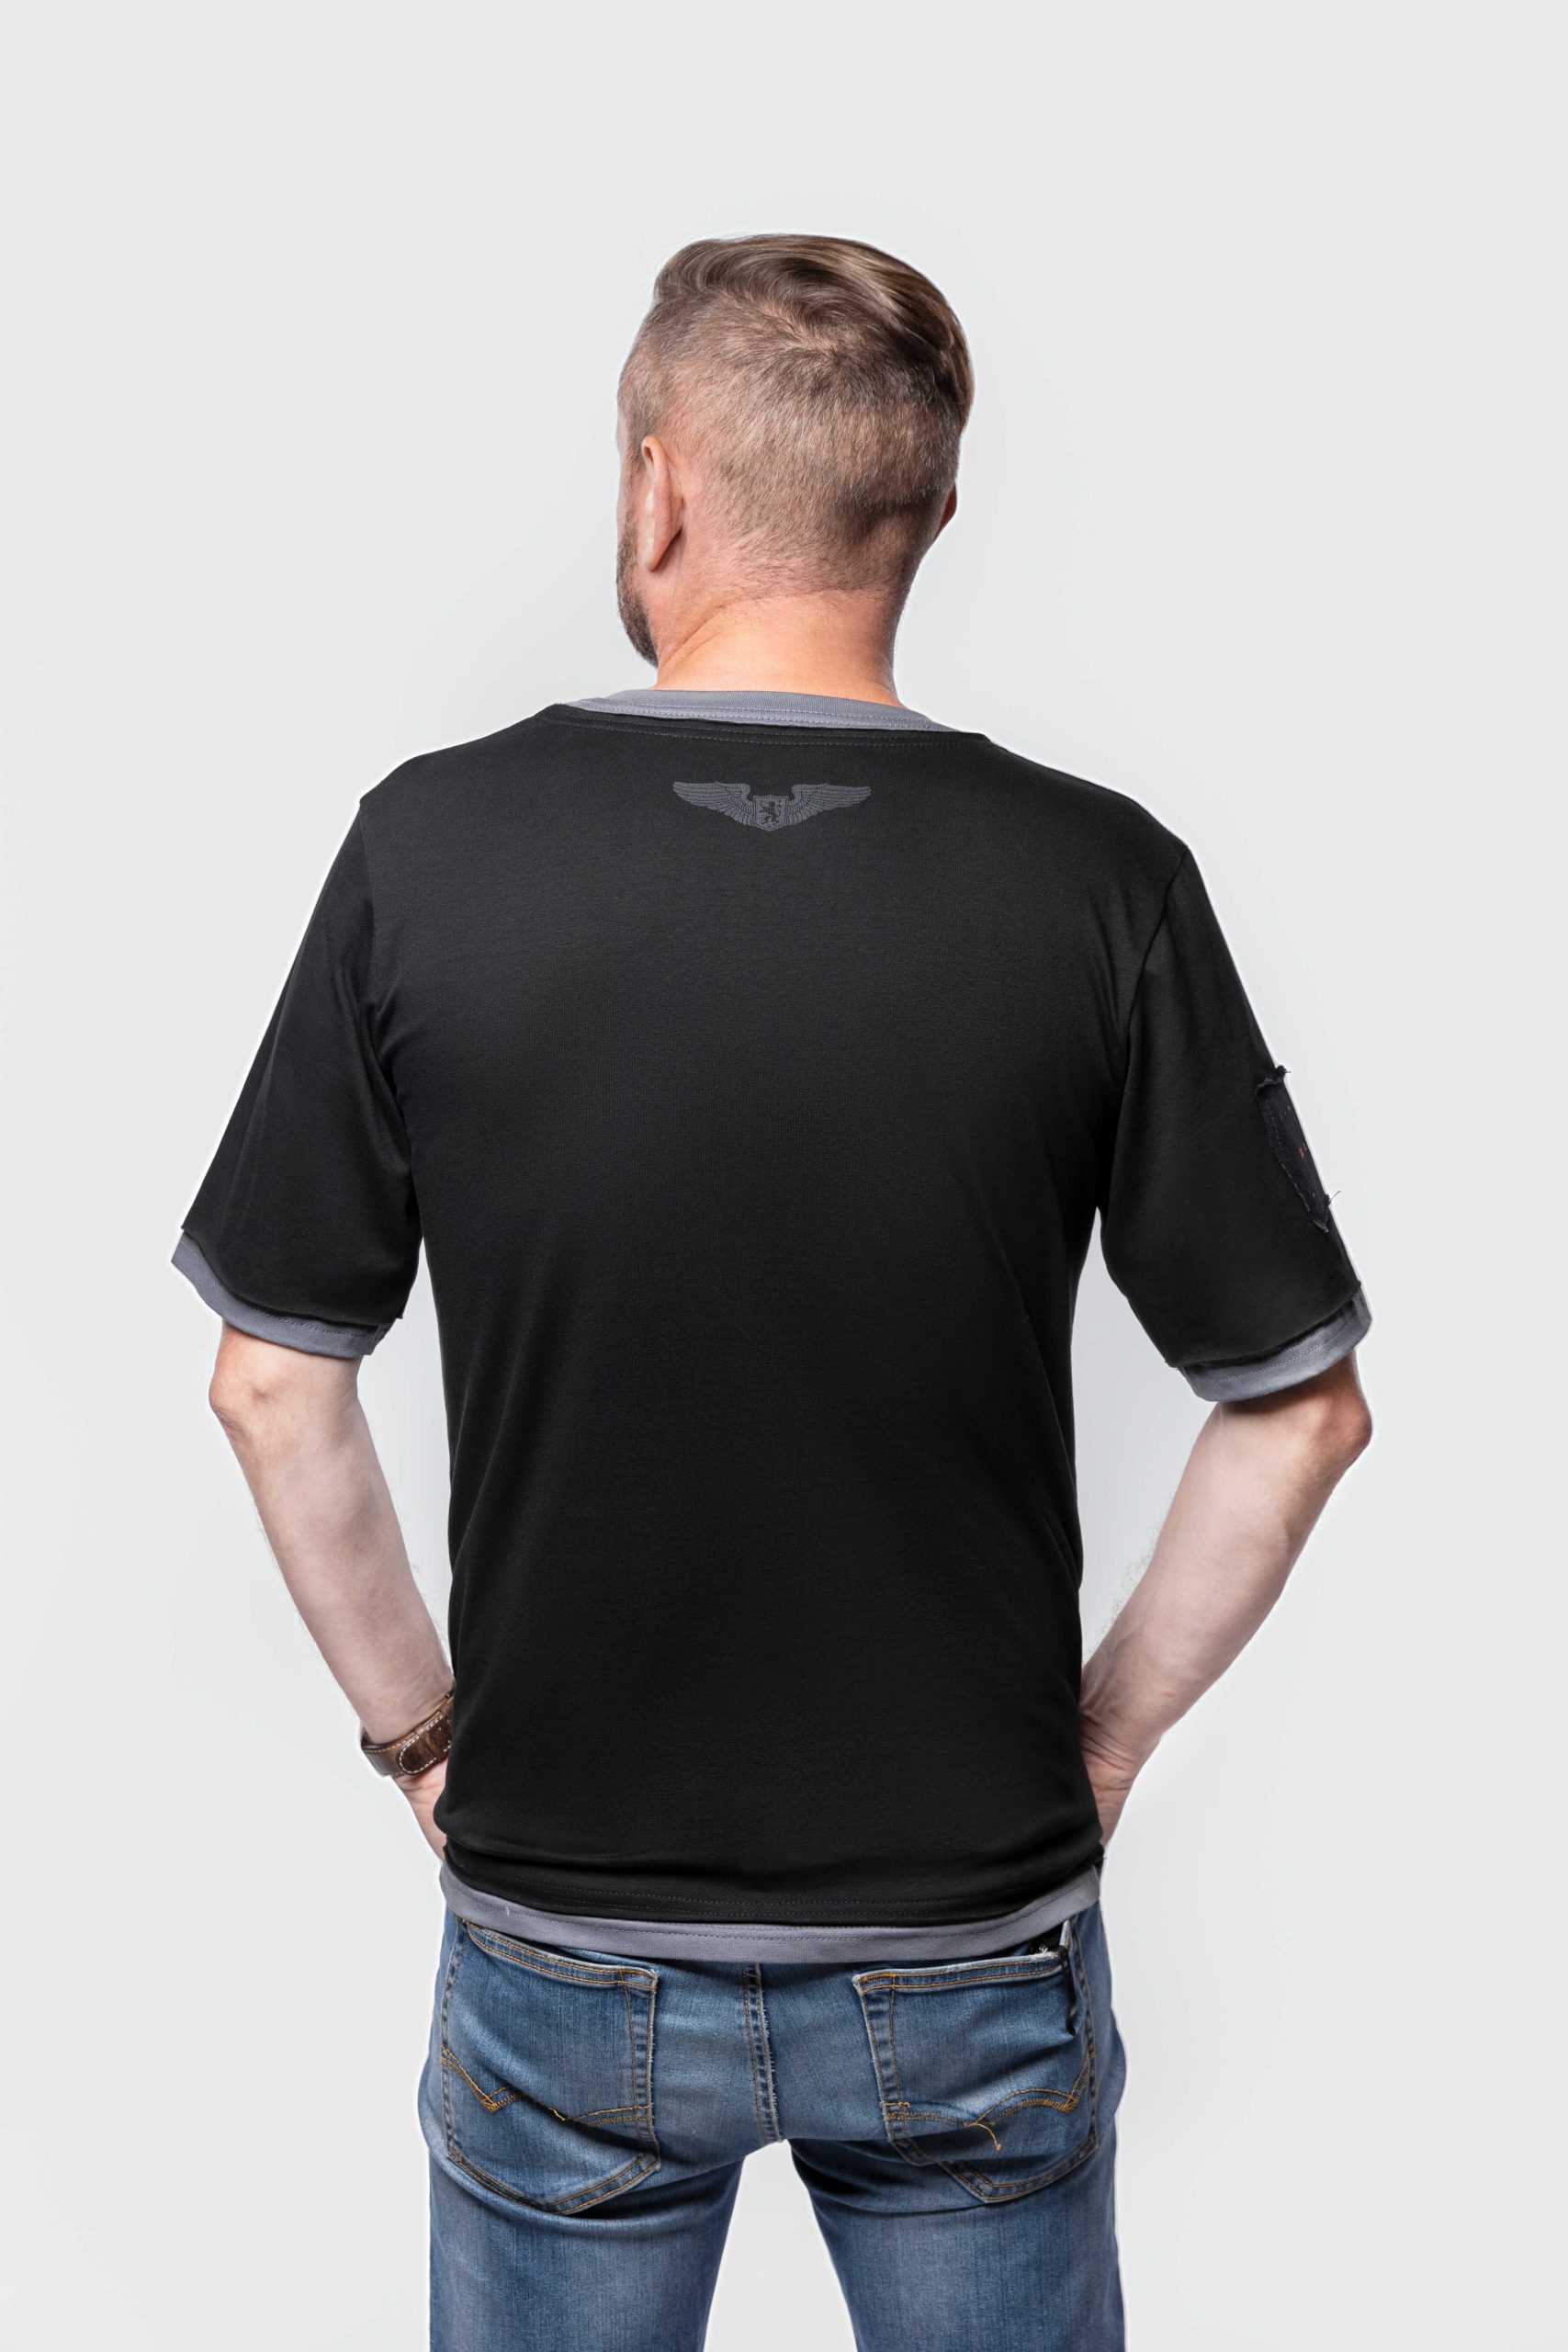 Men's T-Shirt I Love This Country. Color black. 
Unisex T-shirt (men’s sizes).